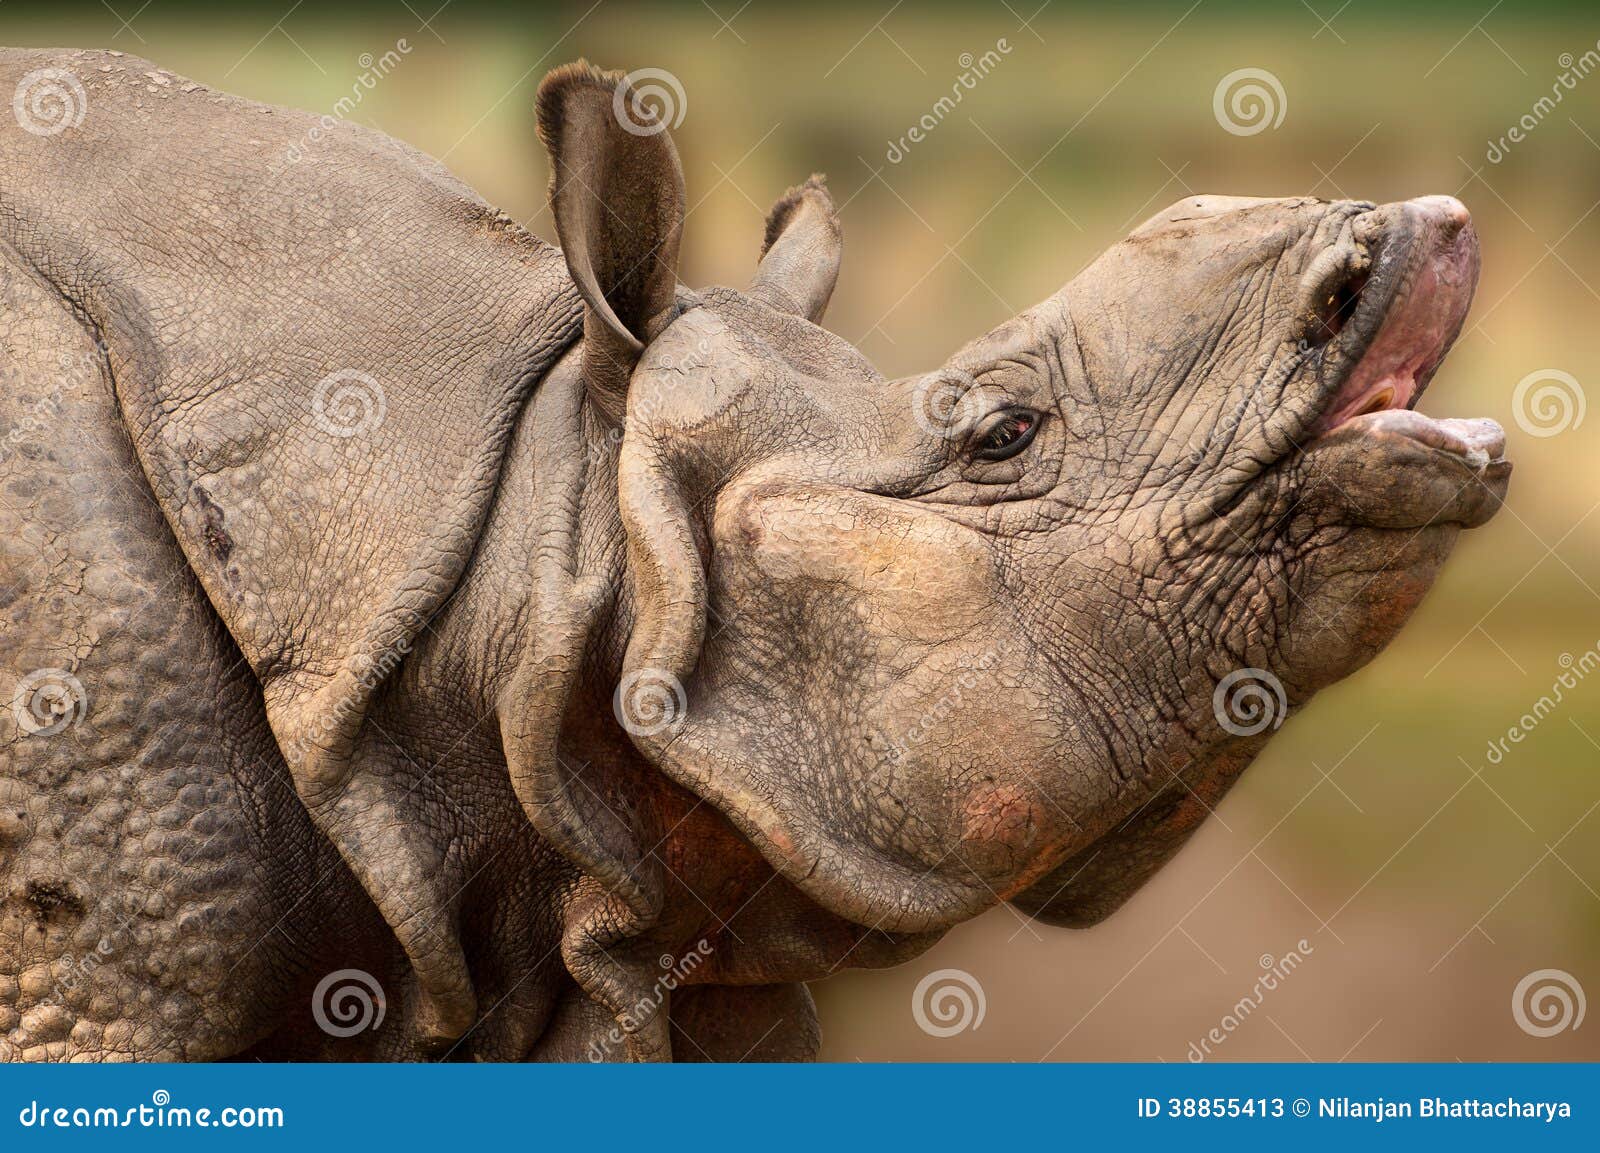 rhinoceros closeup